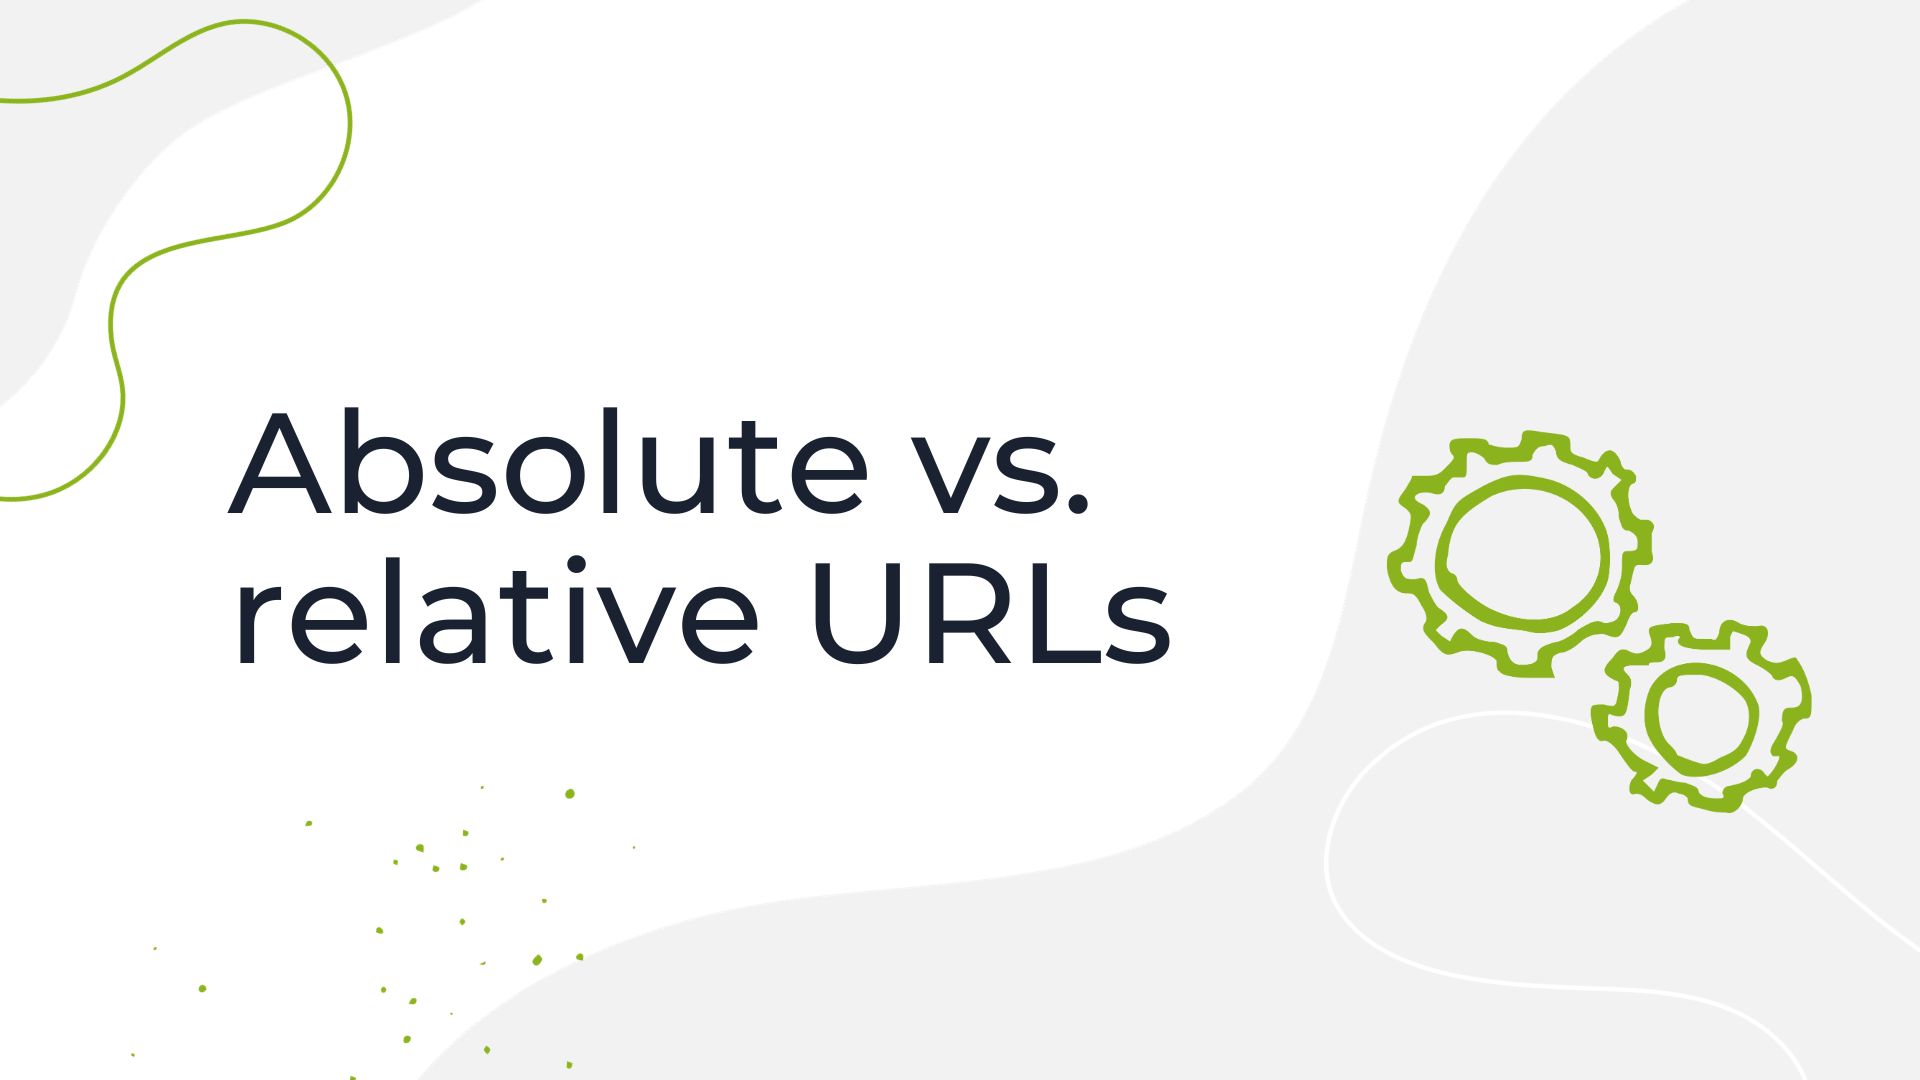 Absolute vs. relative URLs